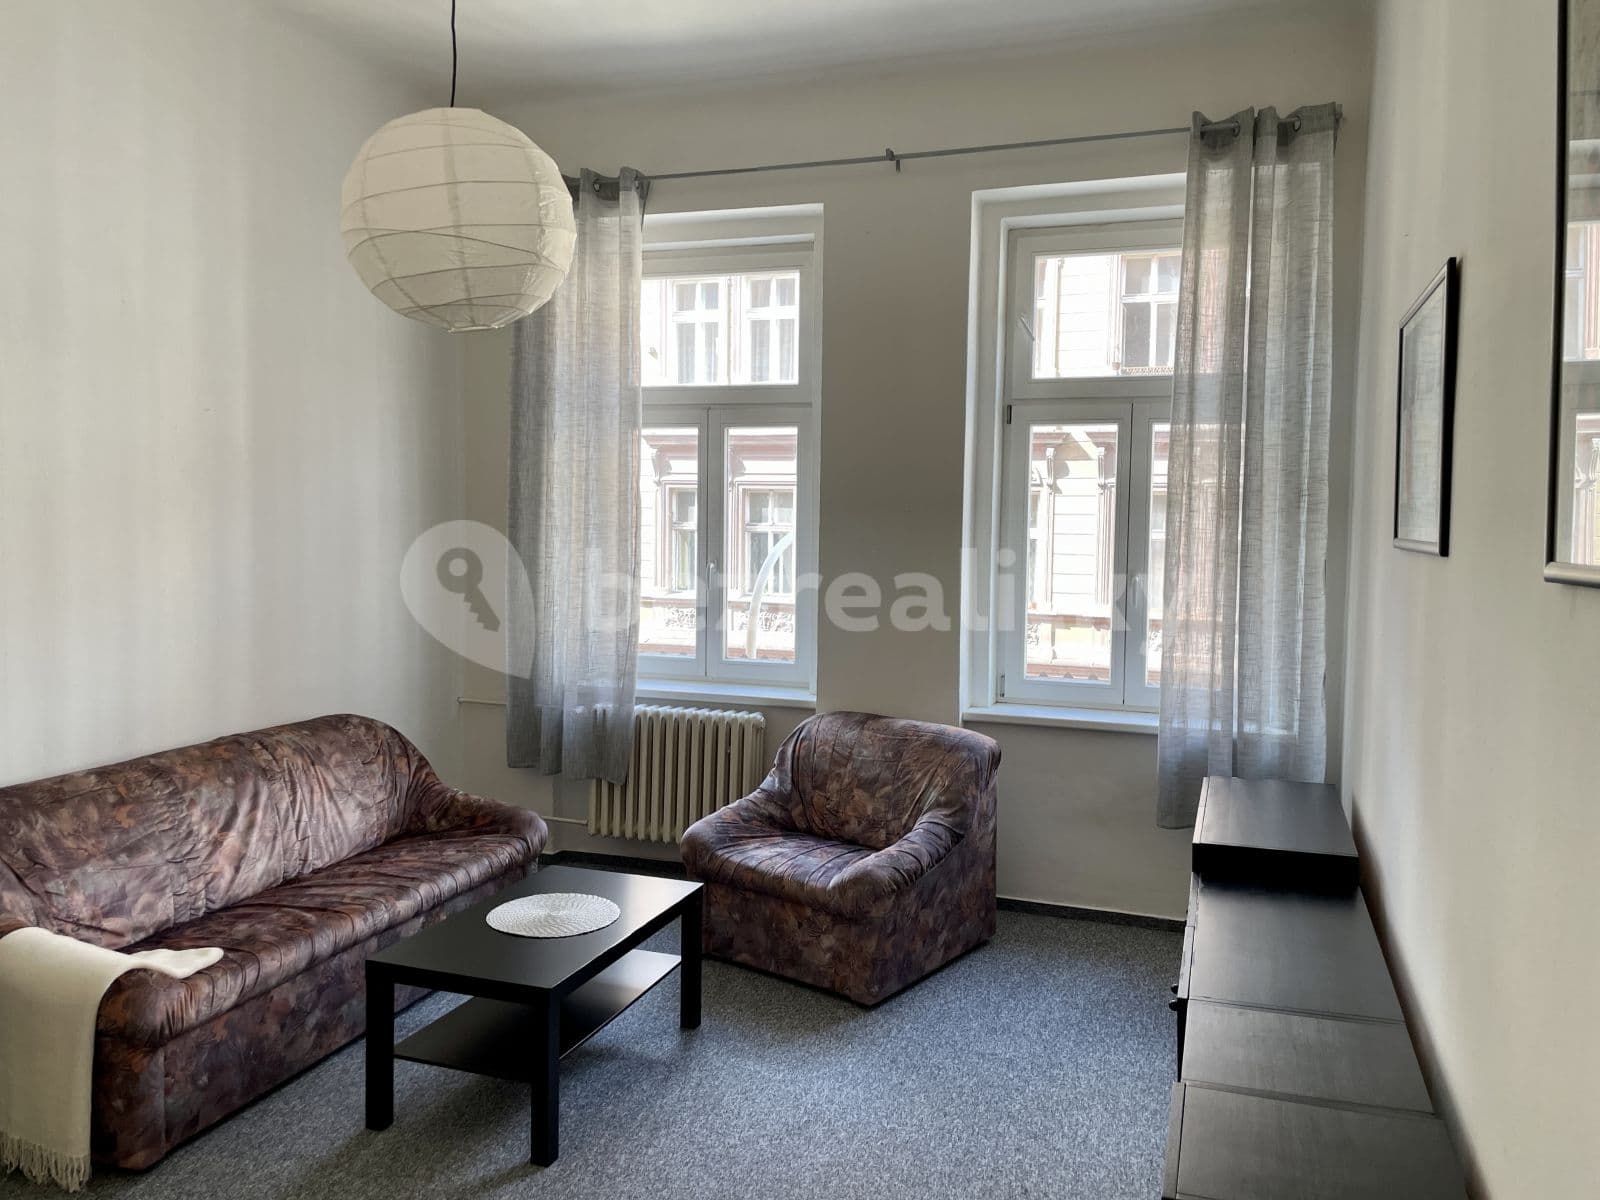 1 bedroom with open-plan kitchen flat to rent, 50 m², Orebitská, Prague, Prague